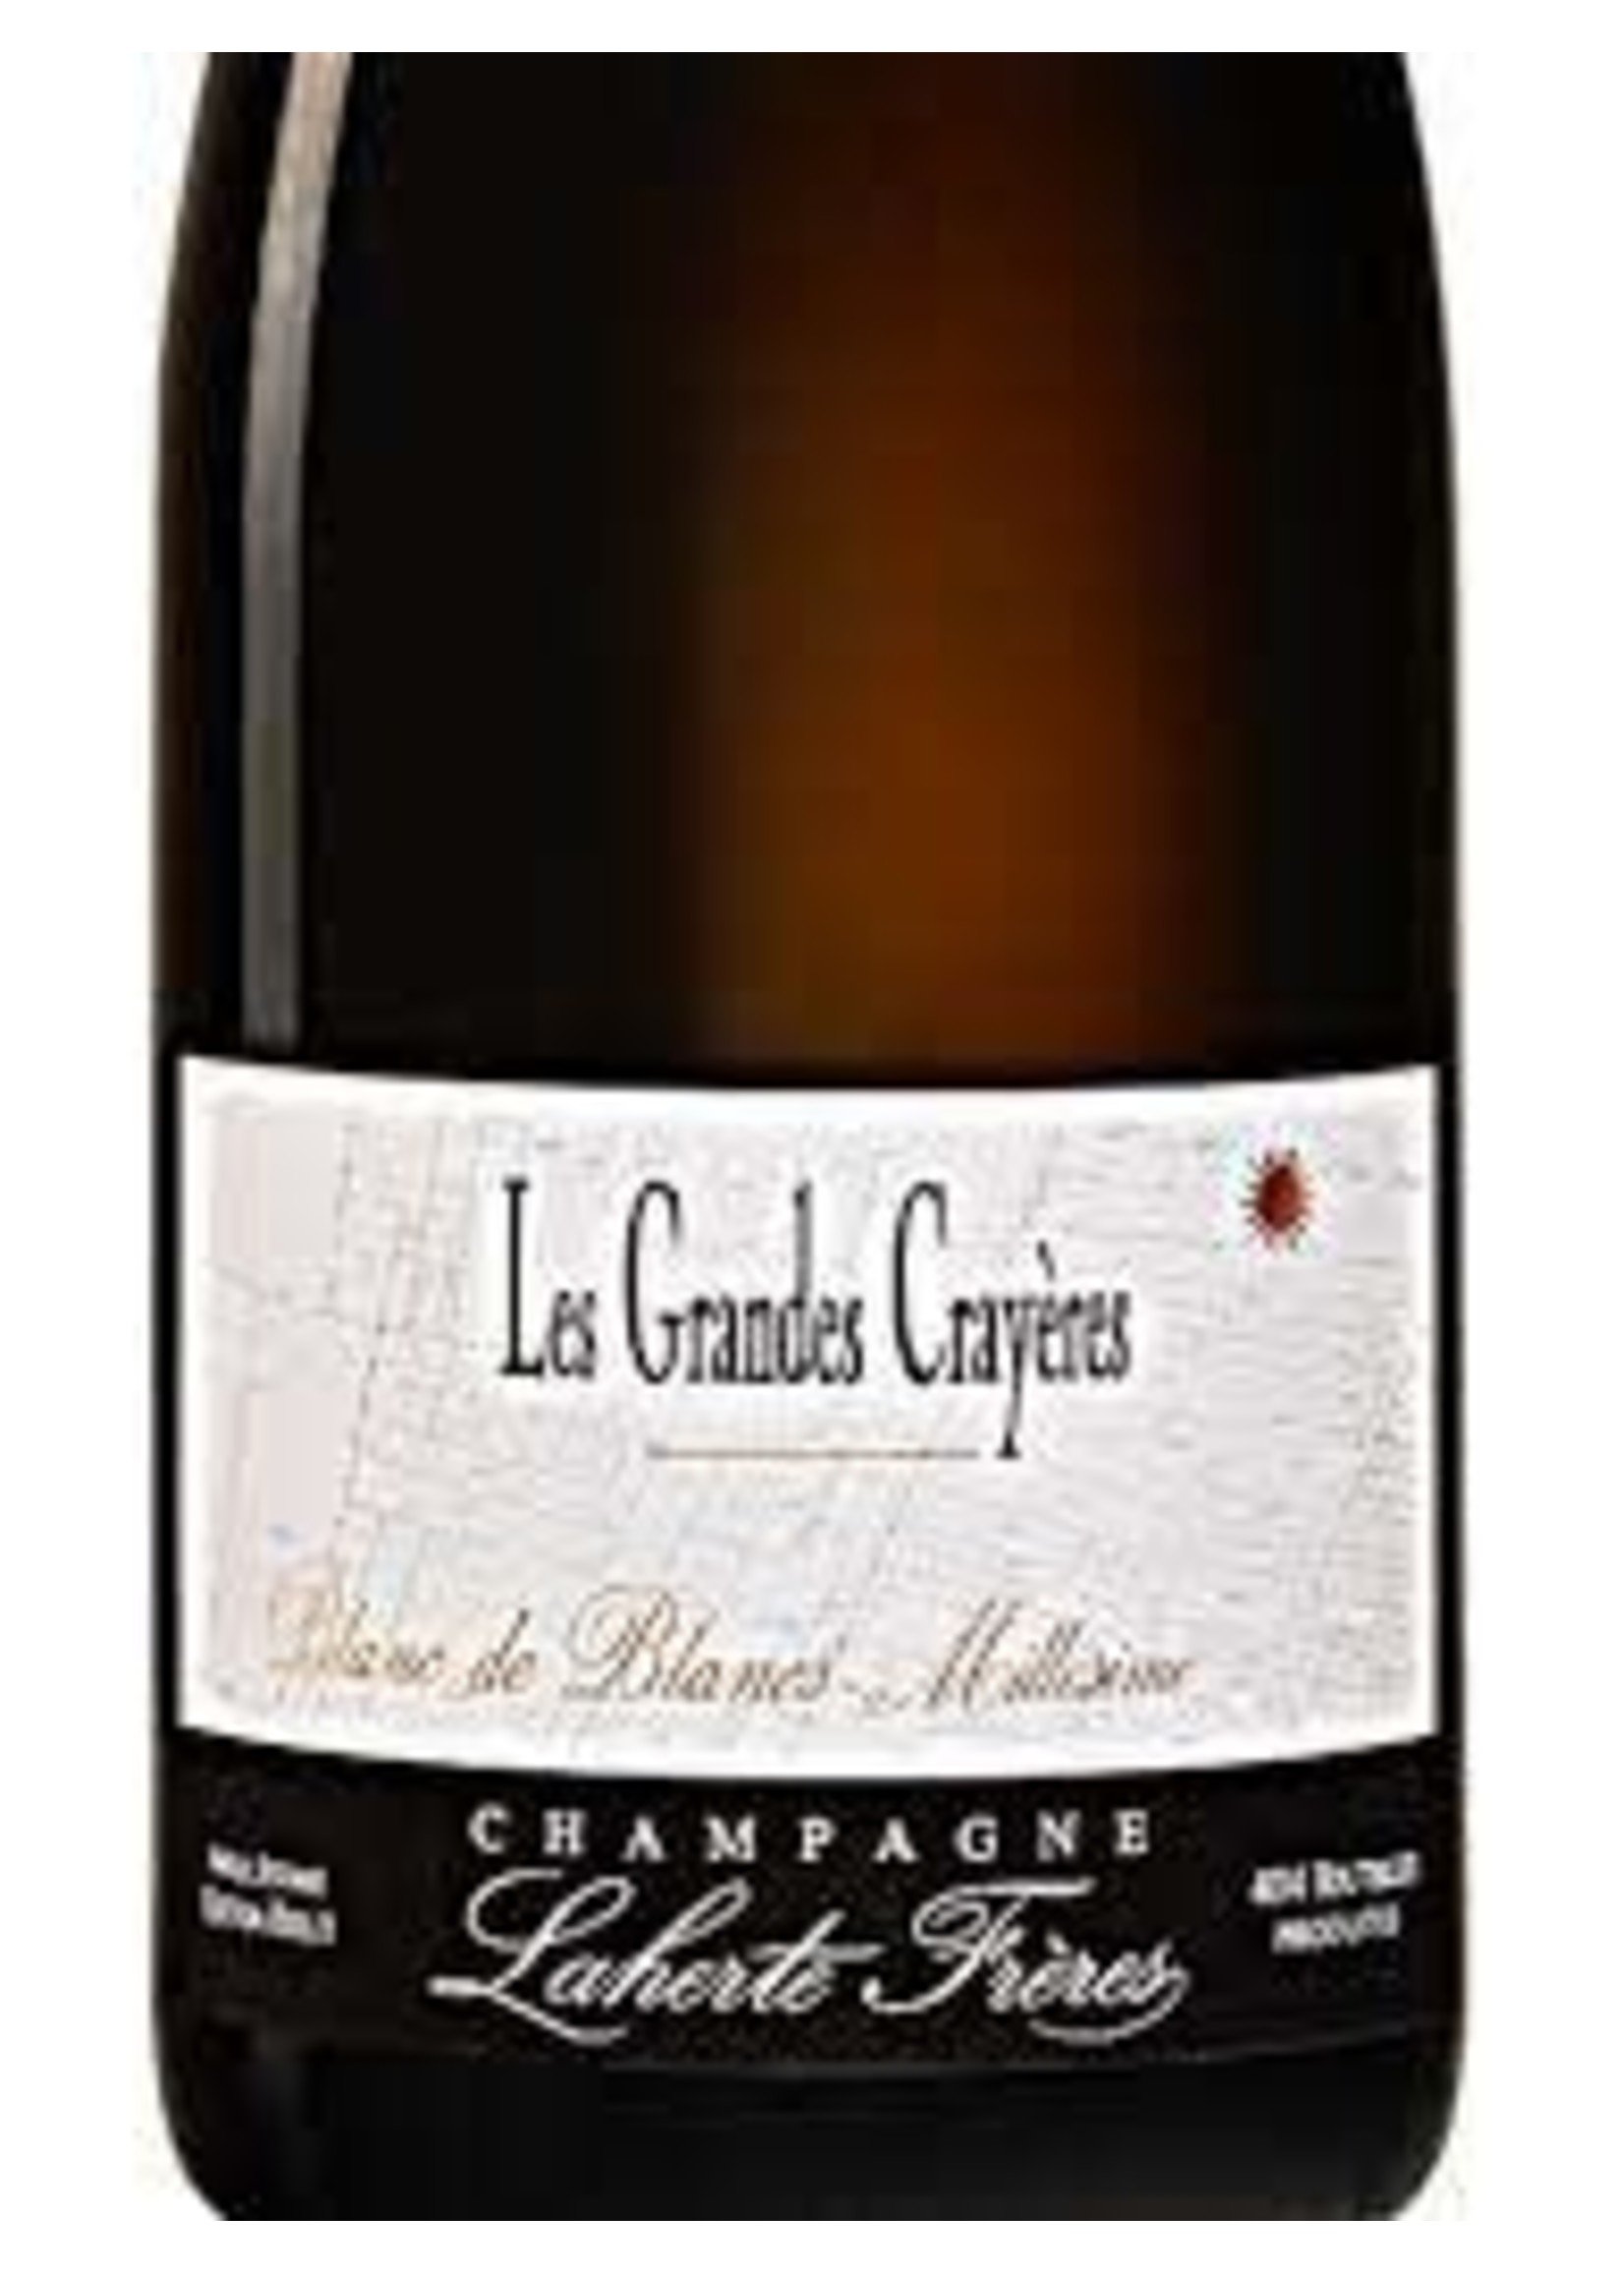 Laherte Freres 2018 Champagne 'Les Grandes Crayeres' Blanc de Blancs Brut 750ml